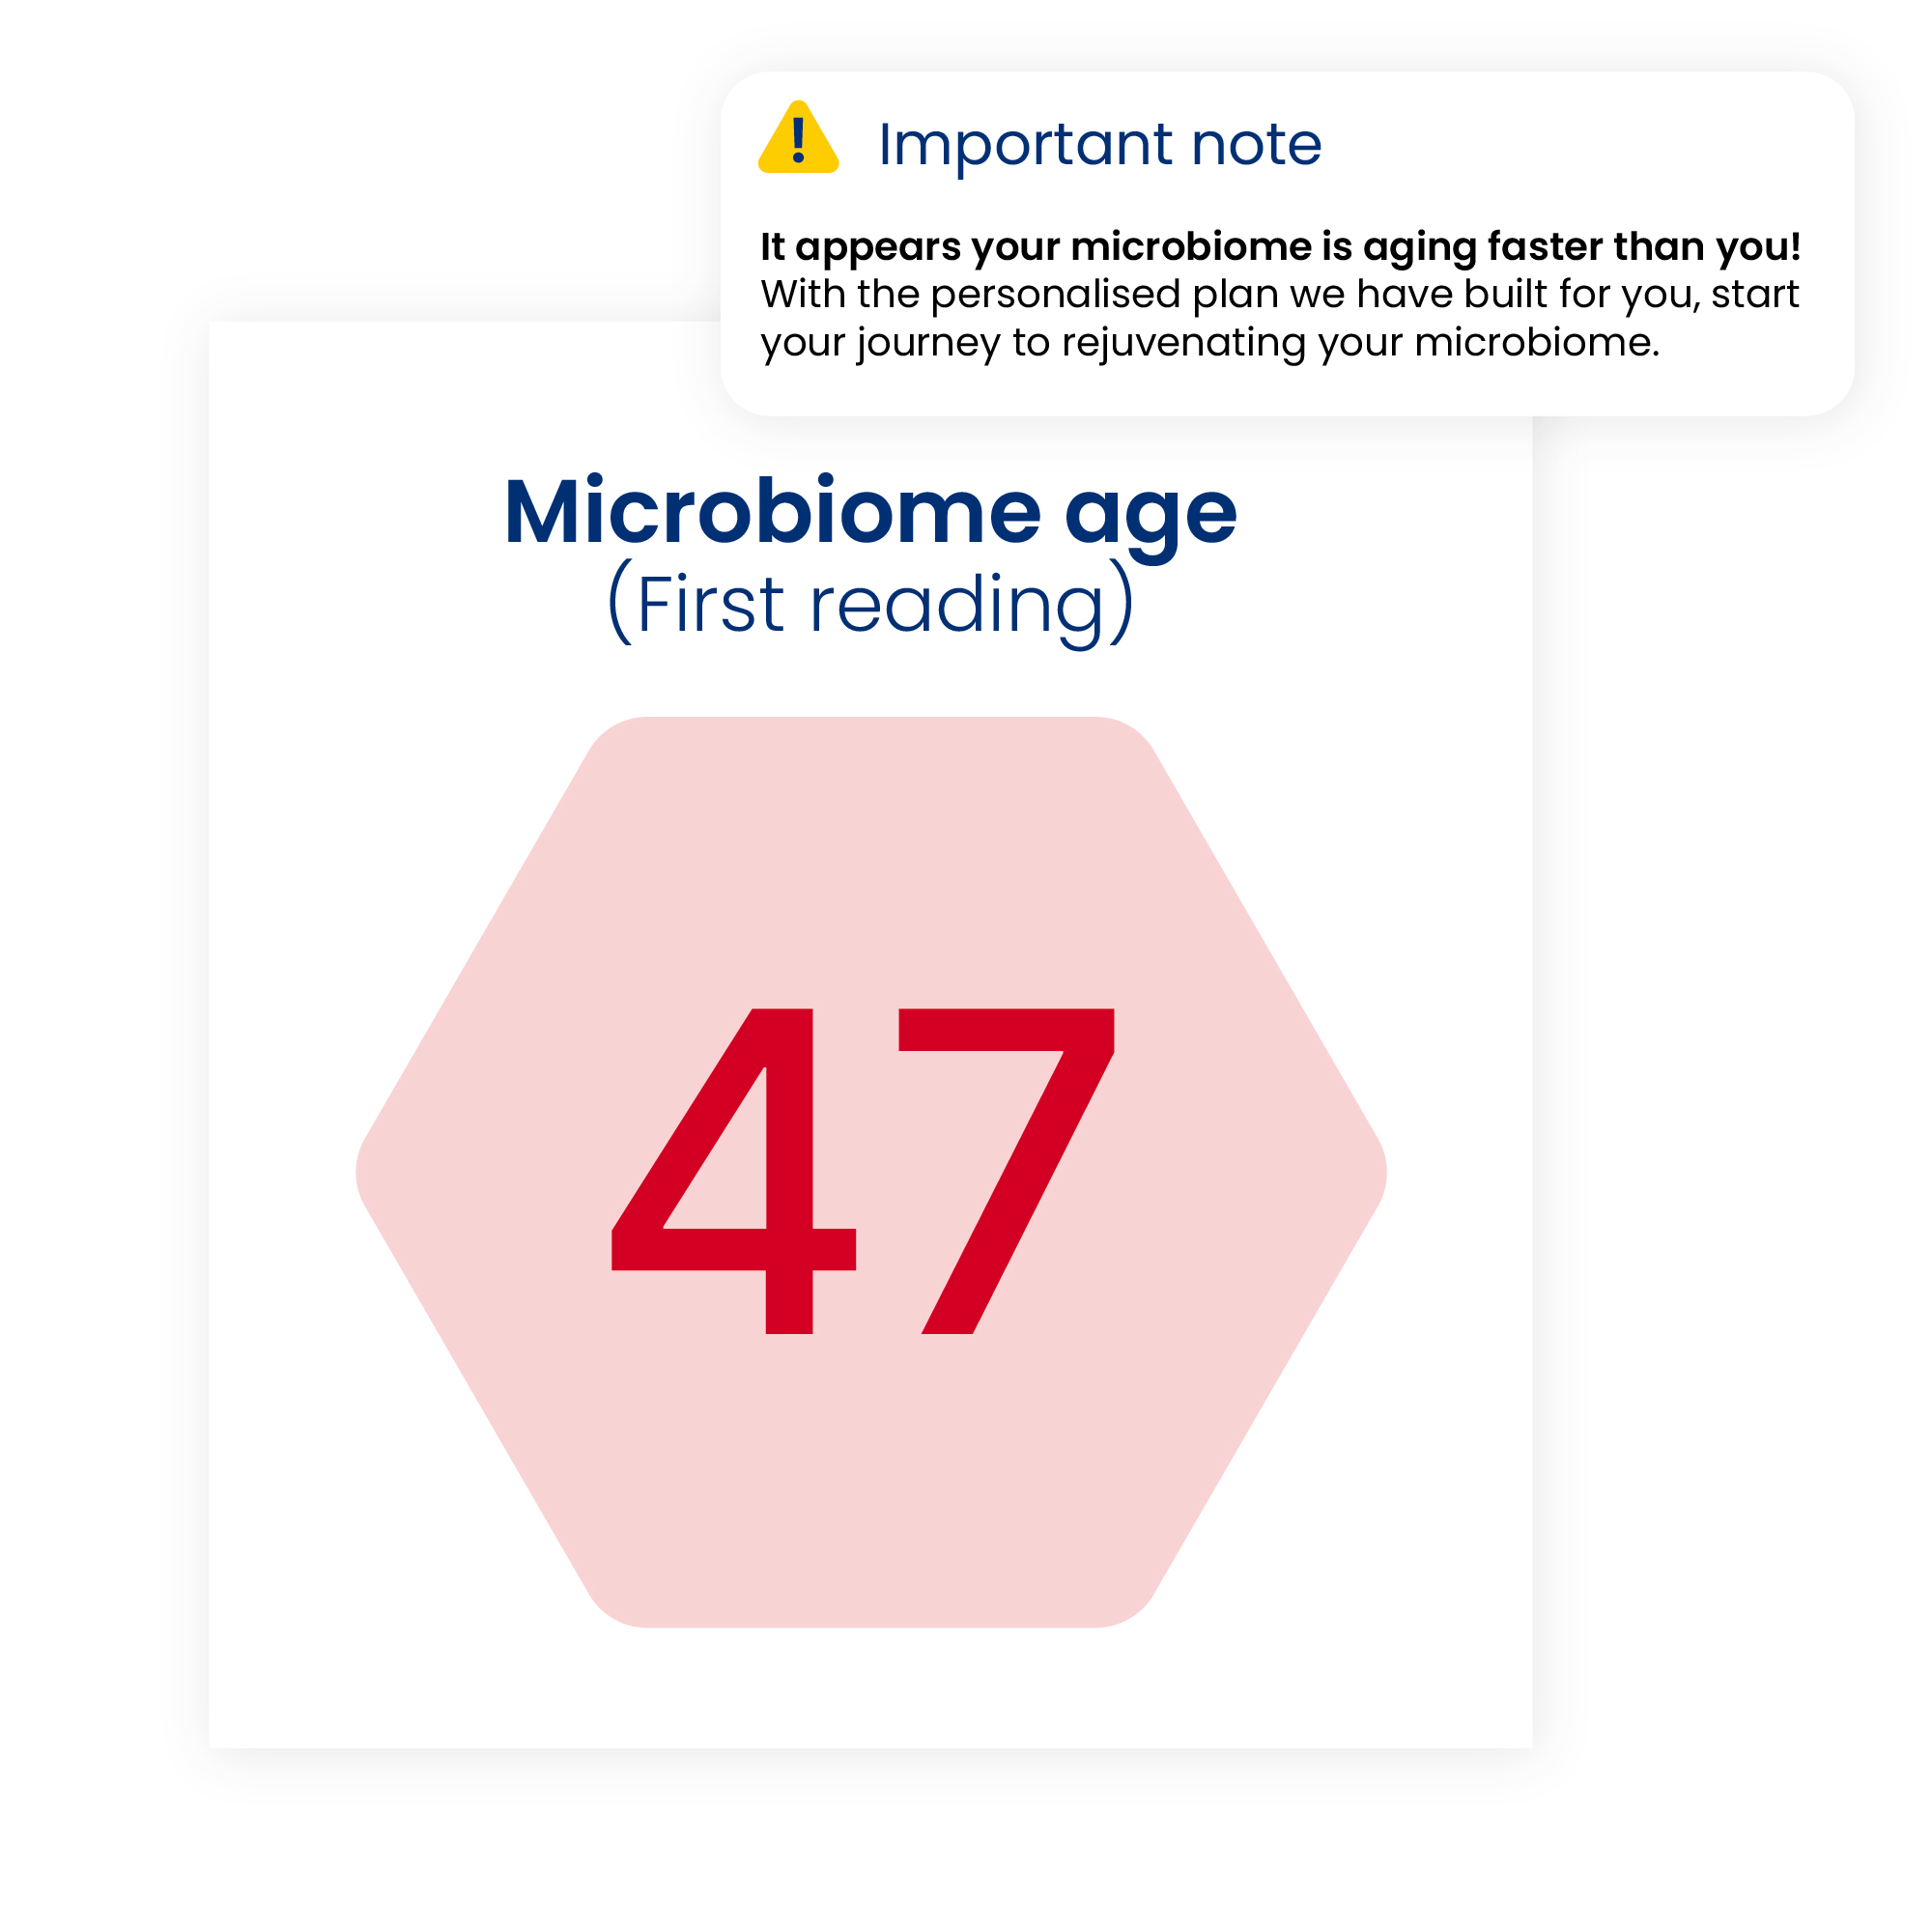 Gut Microbiome Health Test